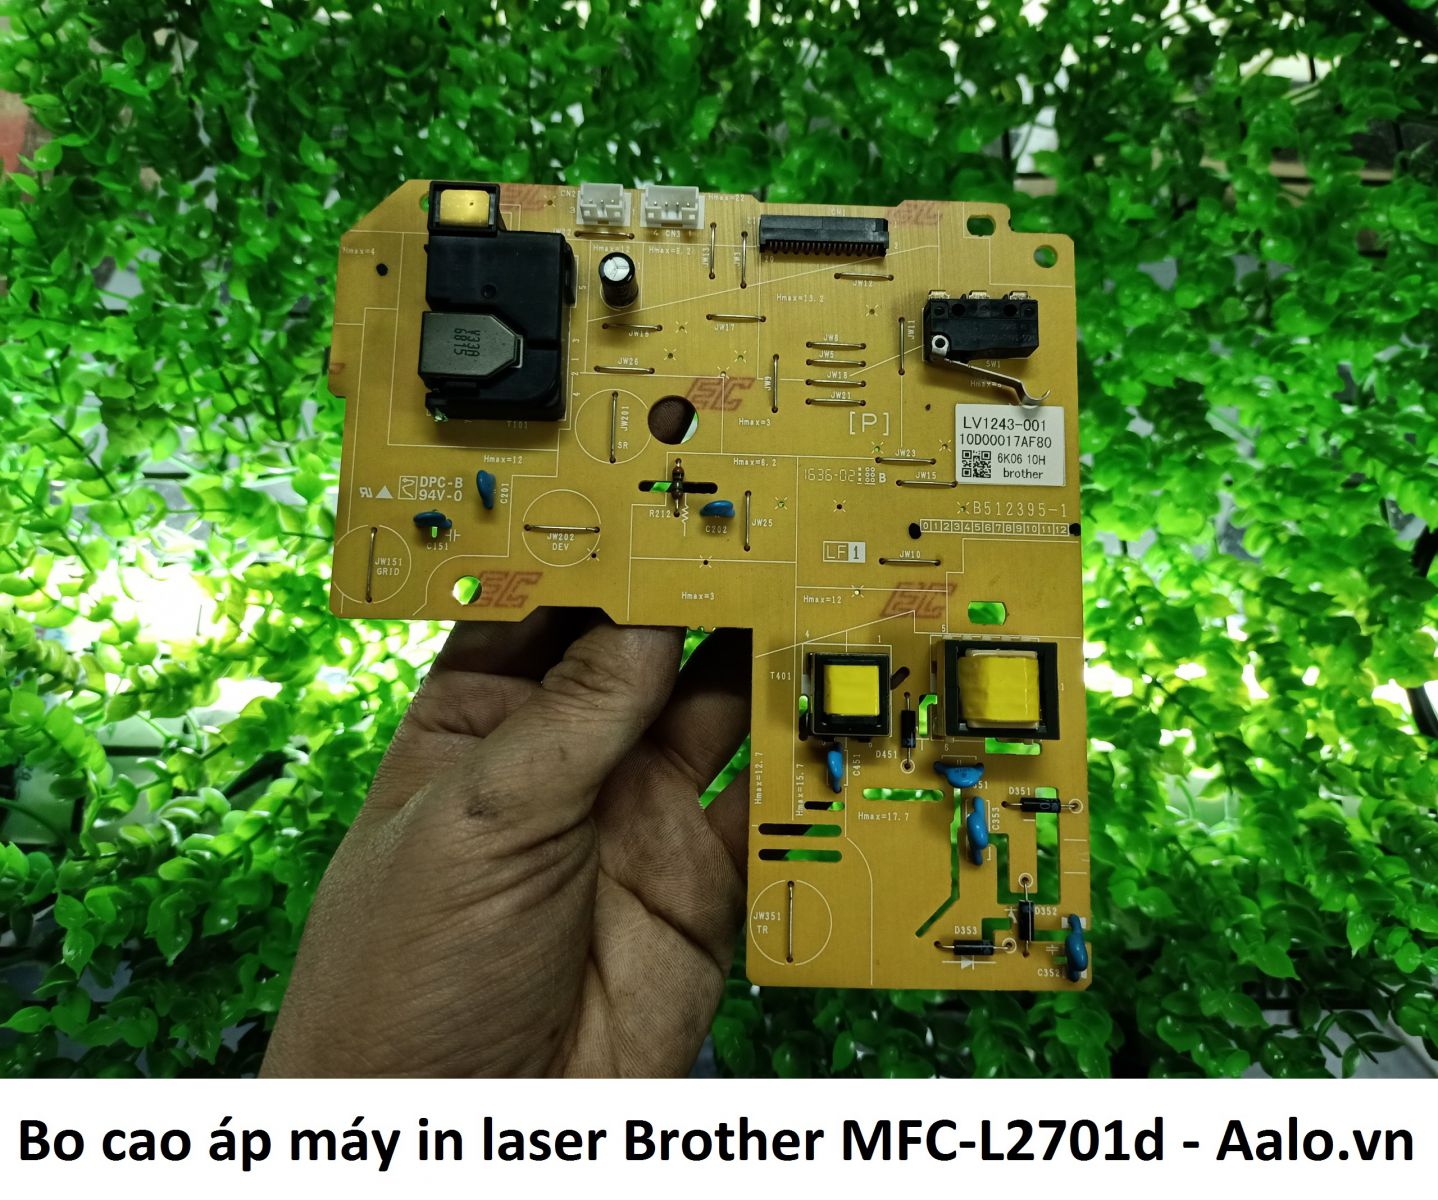 Bo cao áp máy in laser Brother MFC-L2701d - Aalo.vn